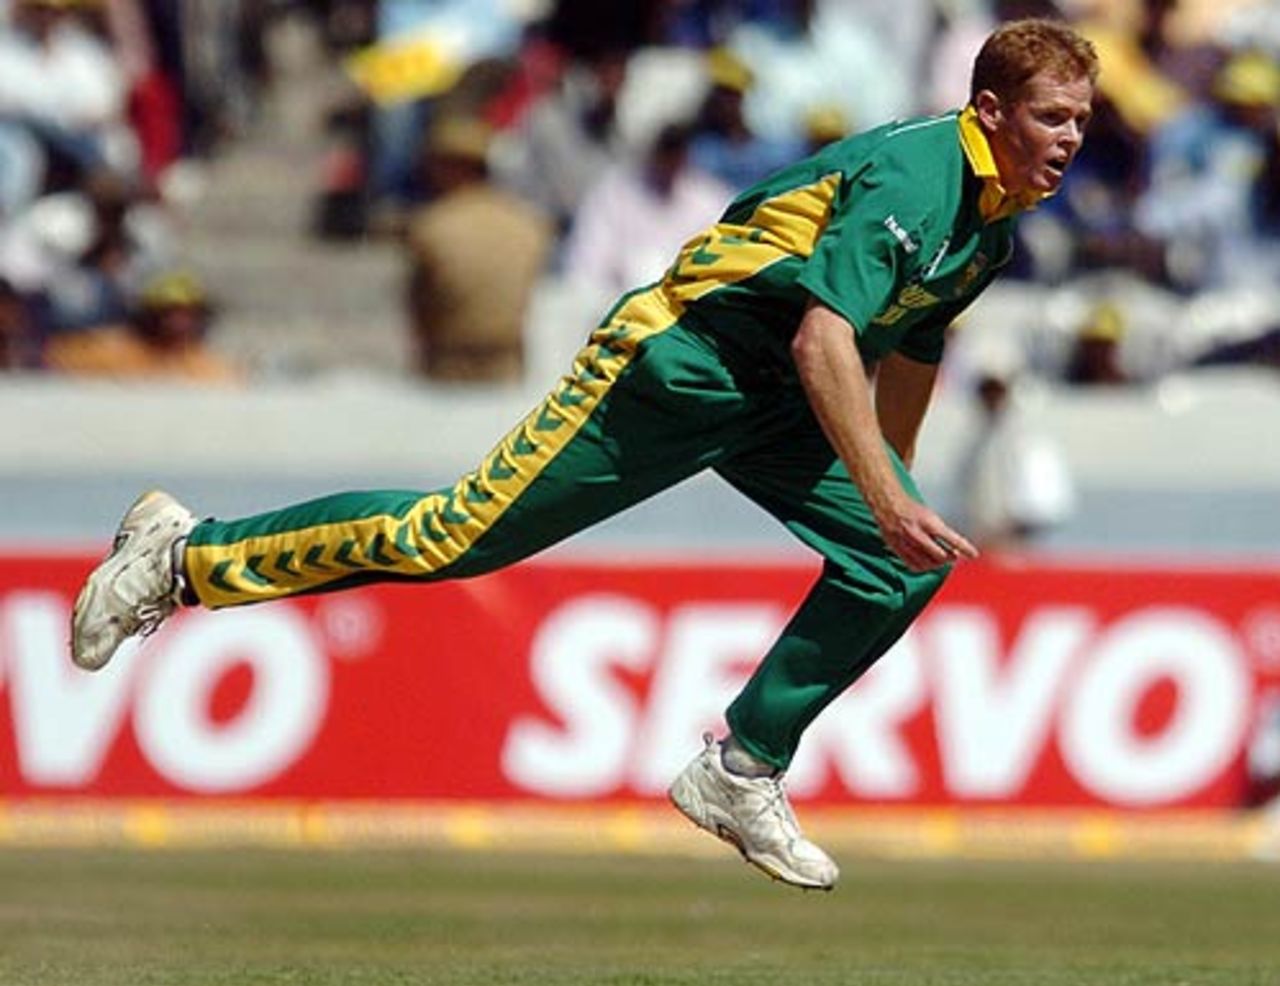 Shaun Pollock's three wickets rocked India from the start, India v South Africa, 1st ODI, Hyderabad, November 16, 2005